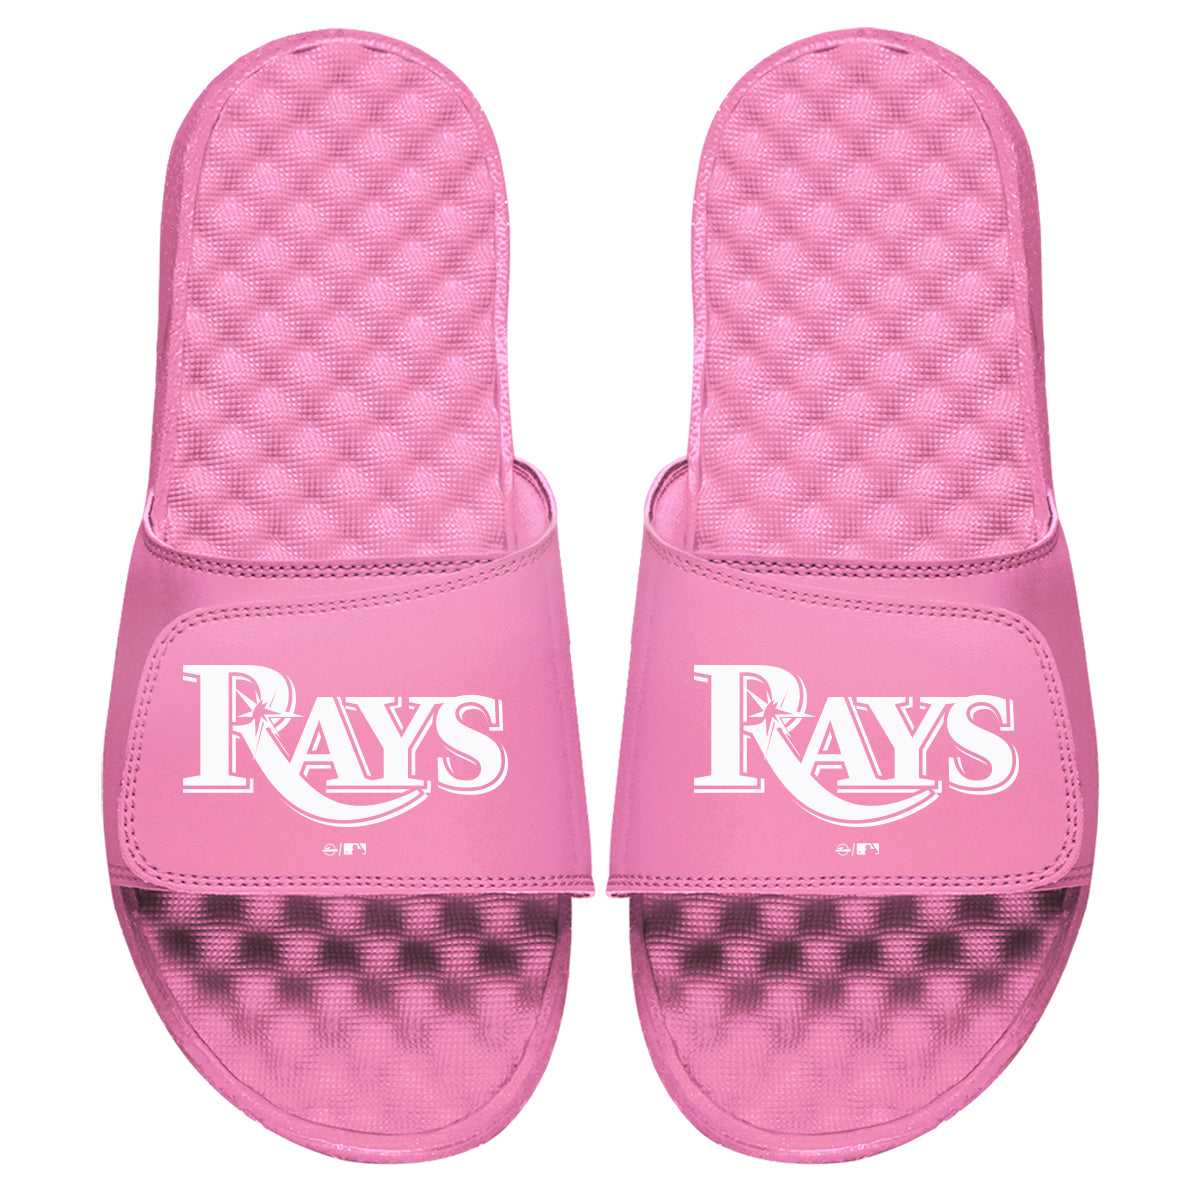 Tampa Bay Rays Primary Pink Slides